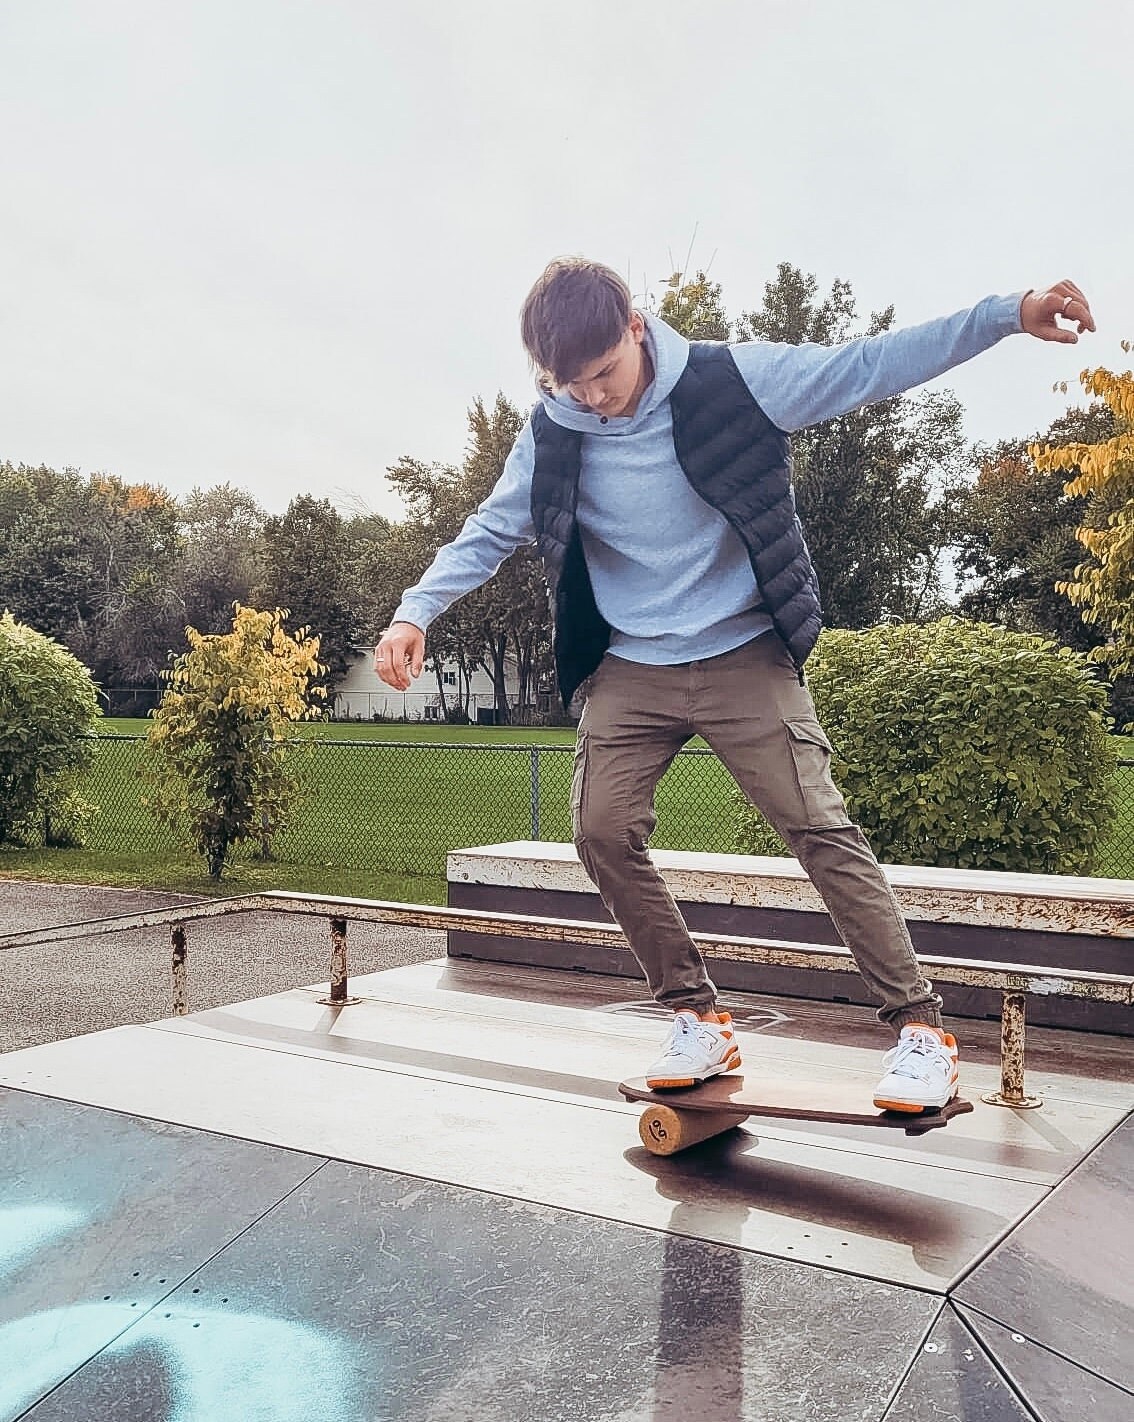 Planche d'équilibre – skateboard - HOPTOYS